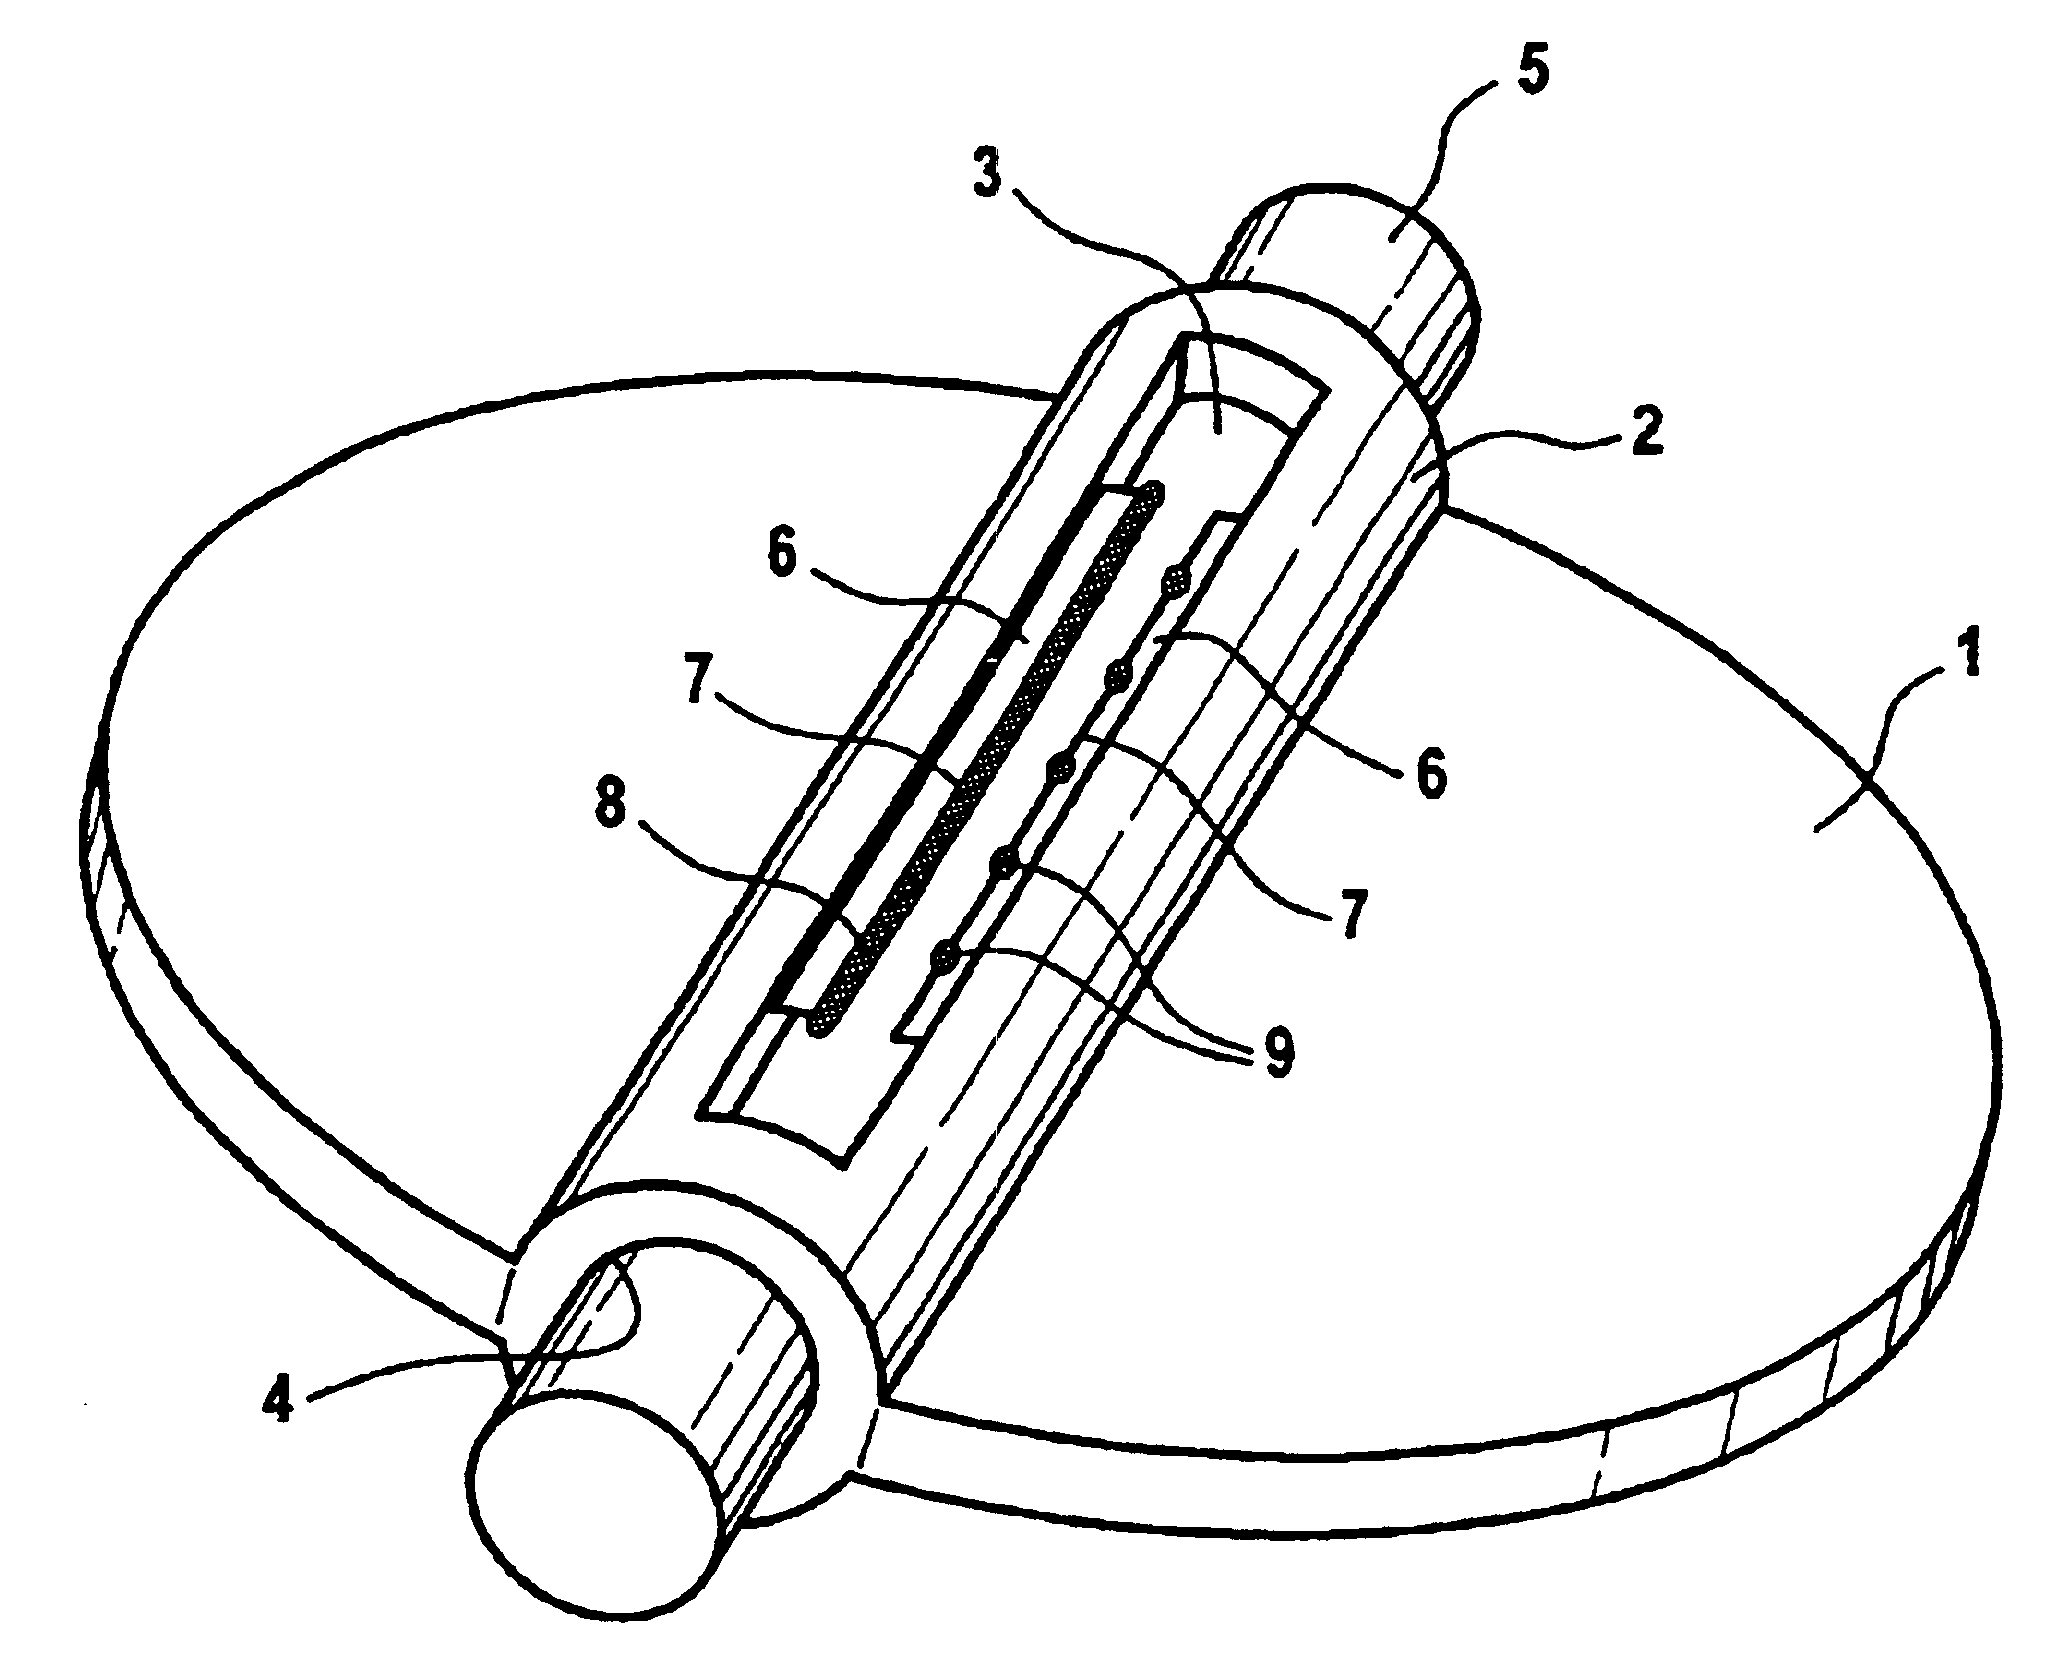 Throttle valve arrangement